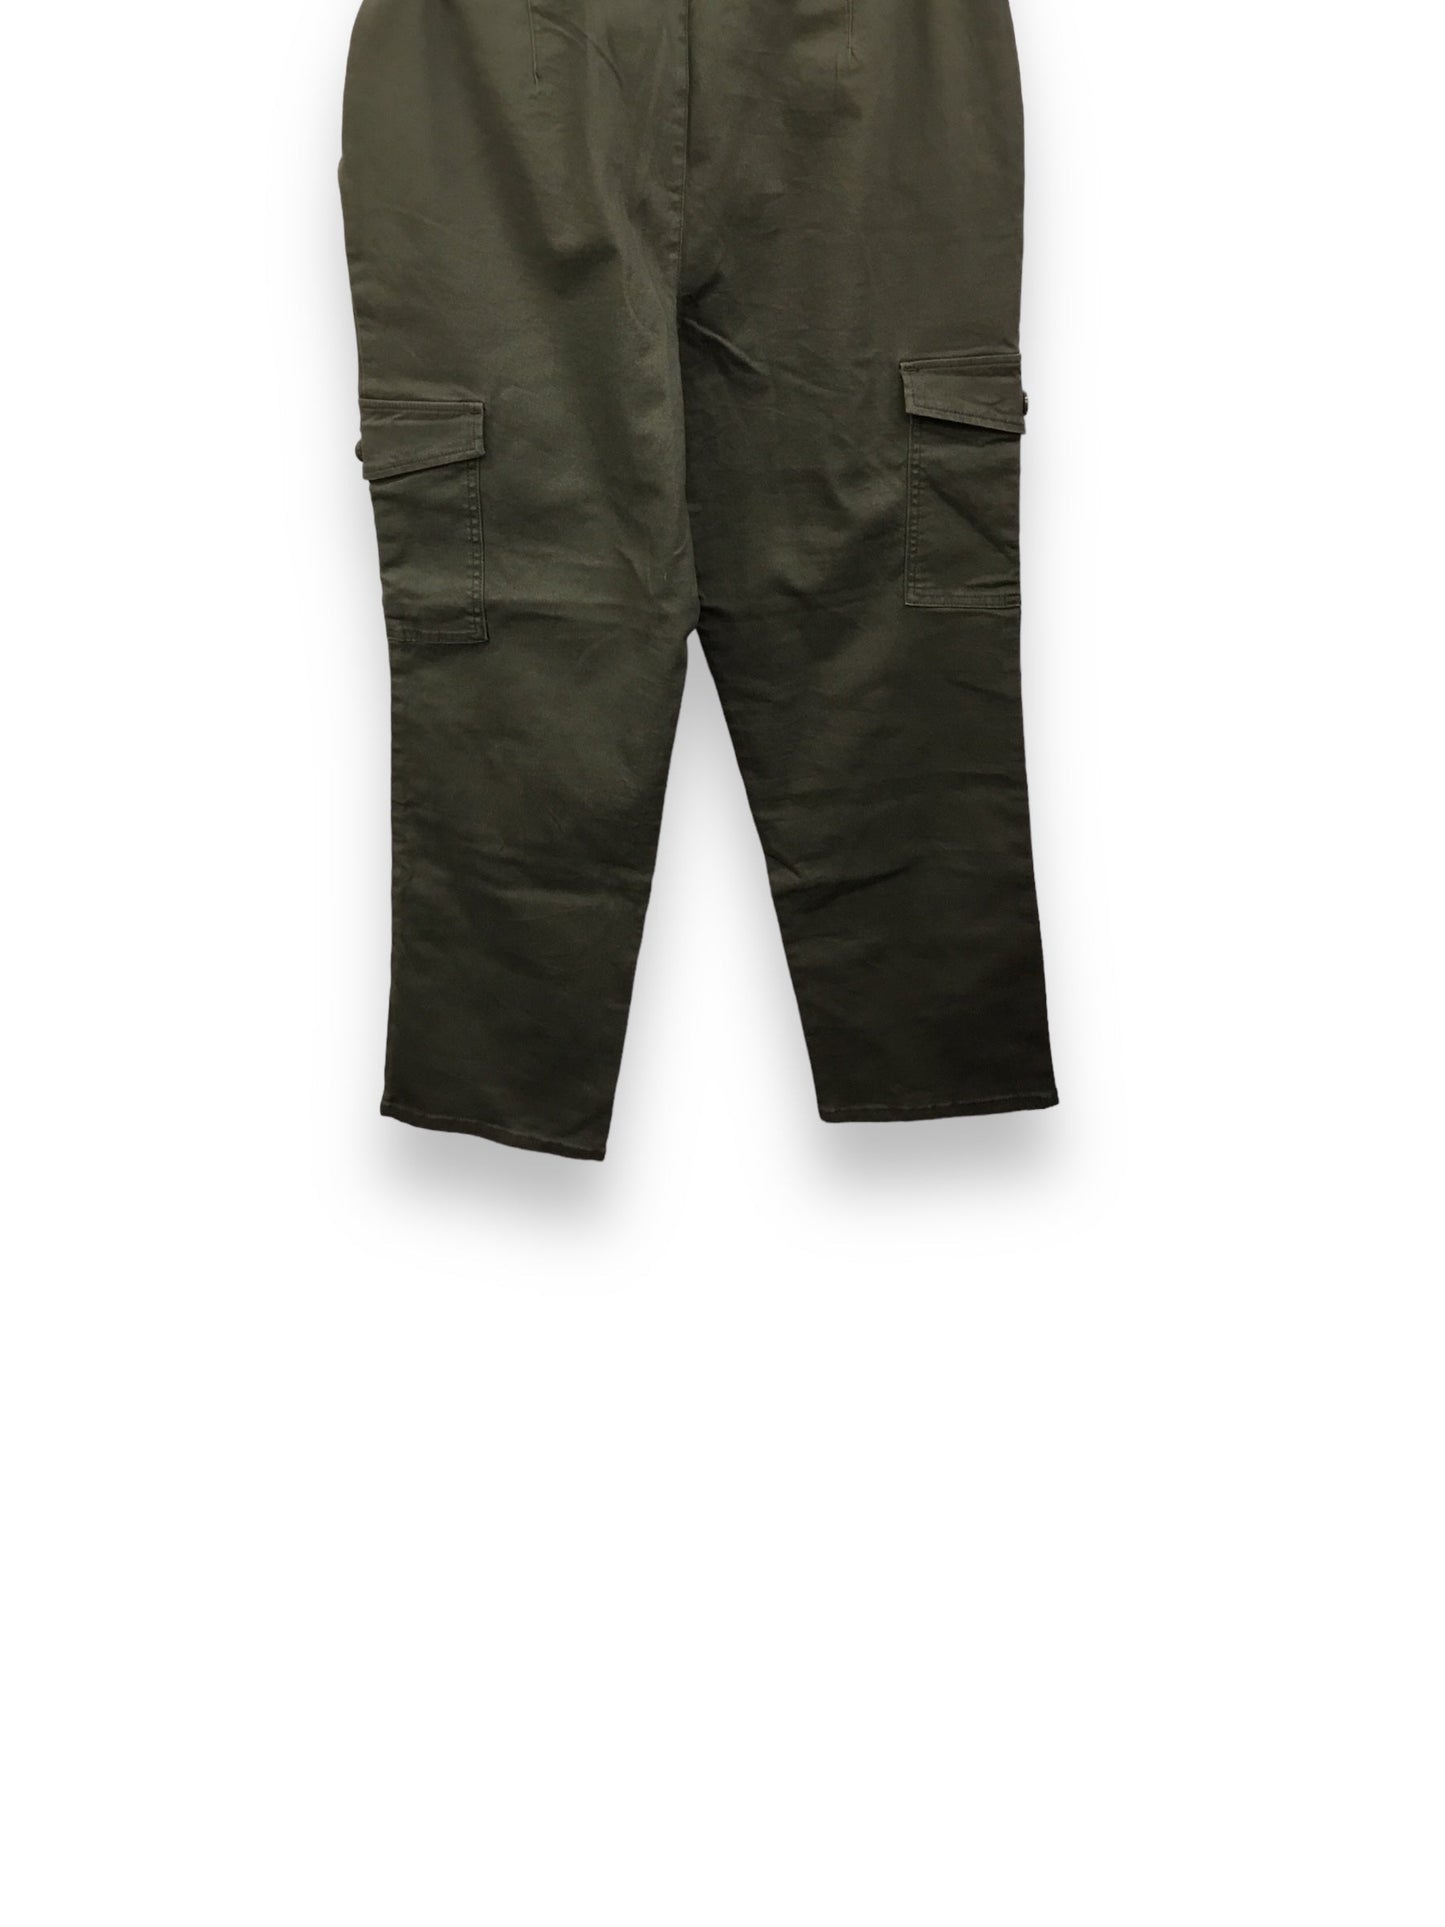 Pants Chinos & Khakis By 1822 Denim  Size: Xl